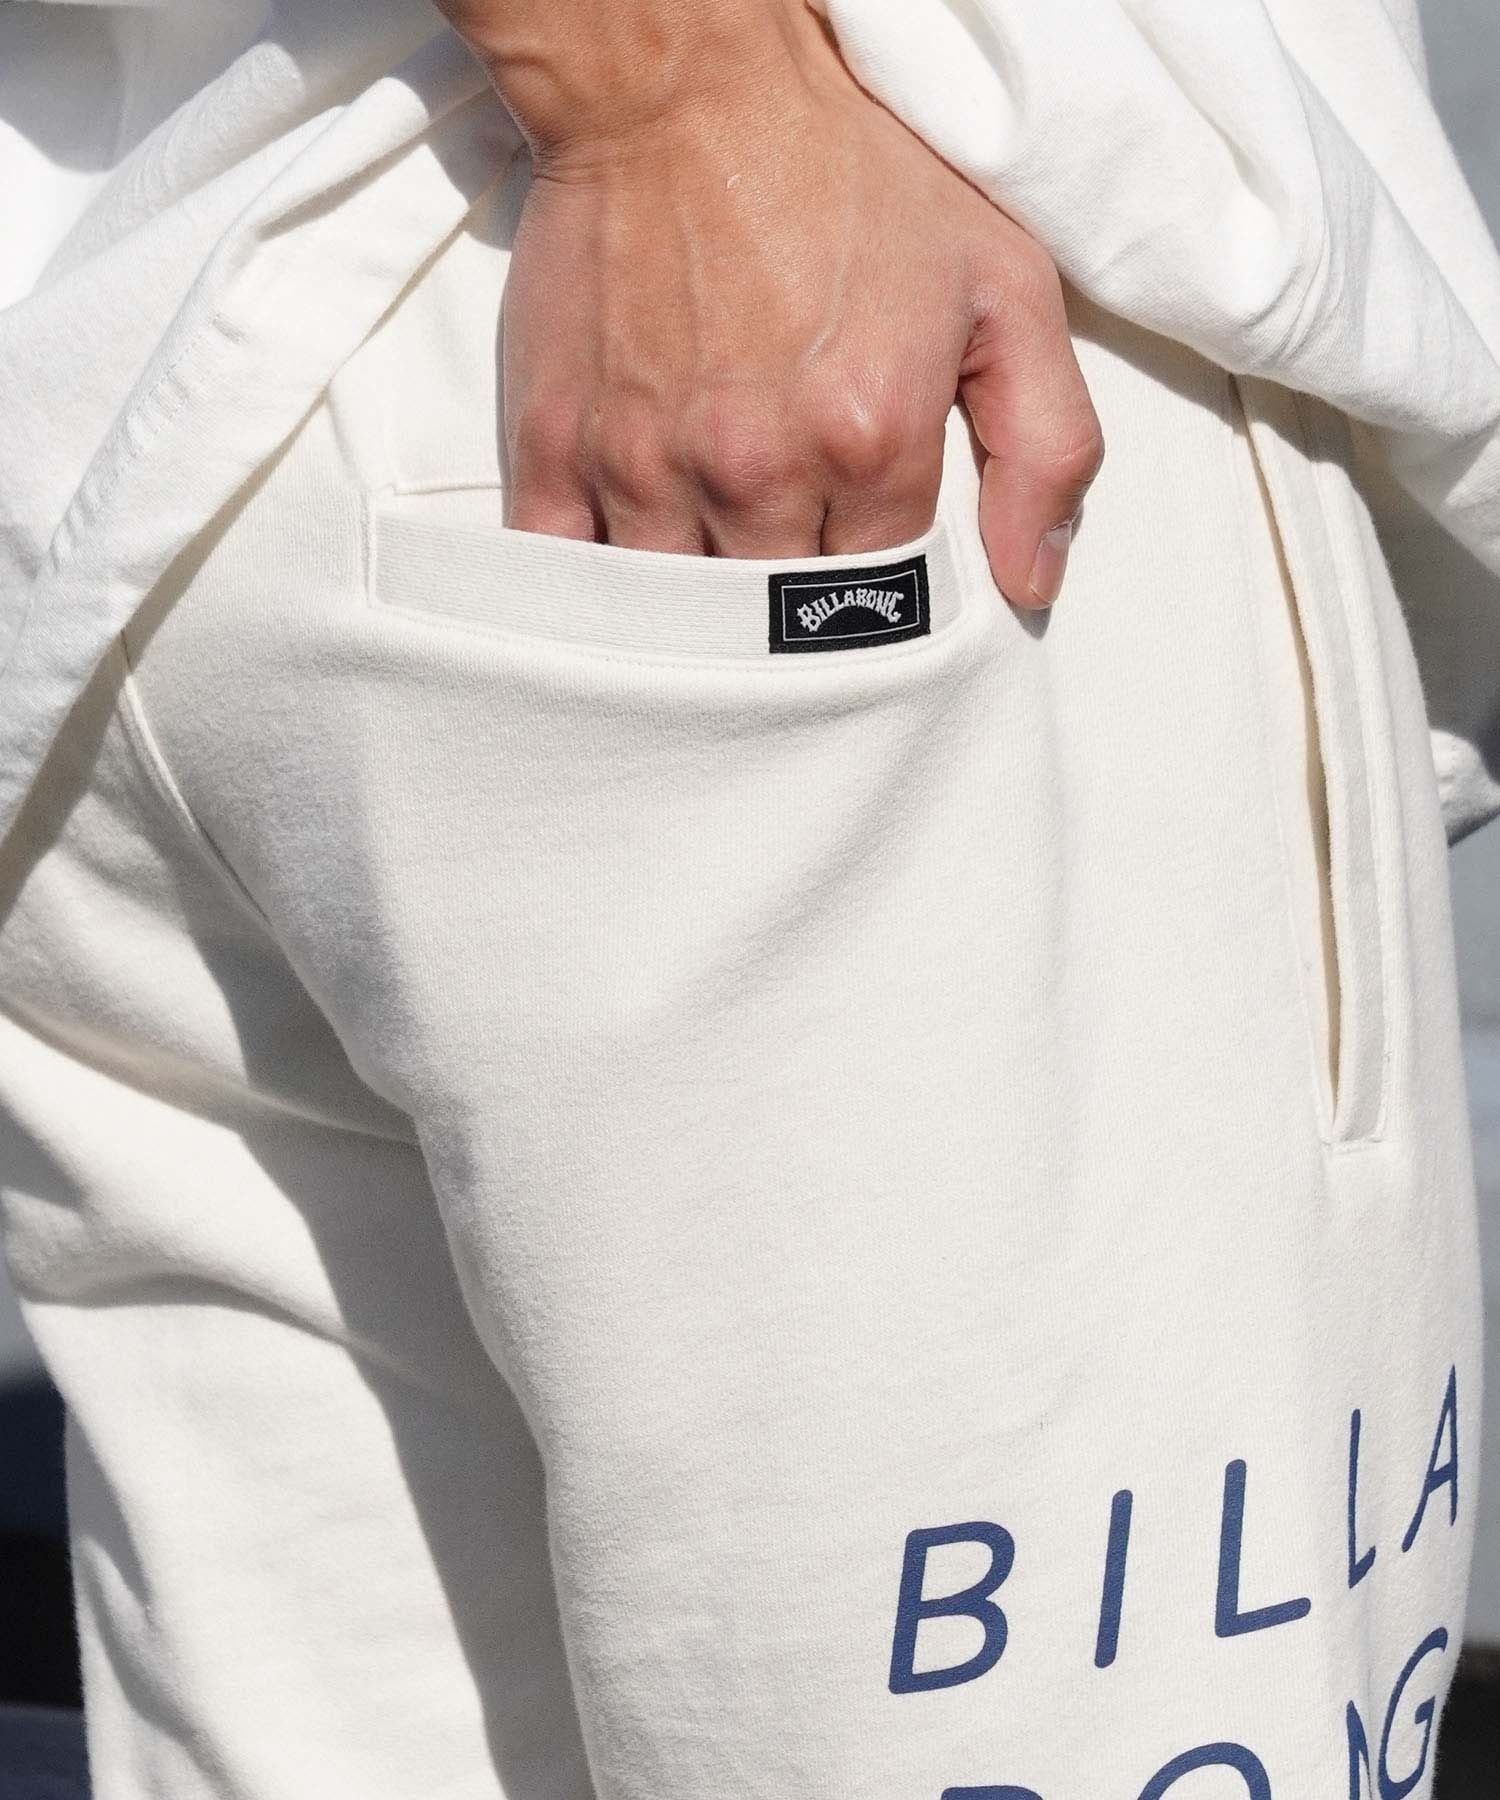 BILLABONG ビラボン LOGO PRINT SHORTS メンズ ショートパンツ ショーツ スウェット ロゴ 裏ピーチ起毛 BE011-605(IND-M)